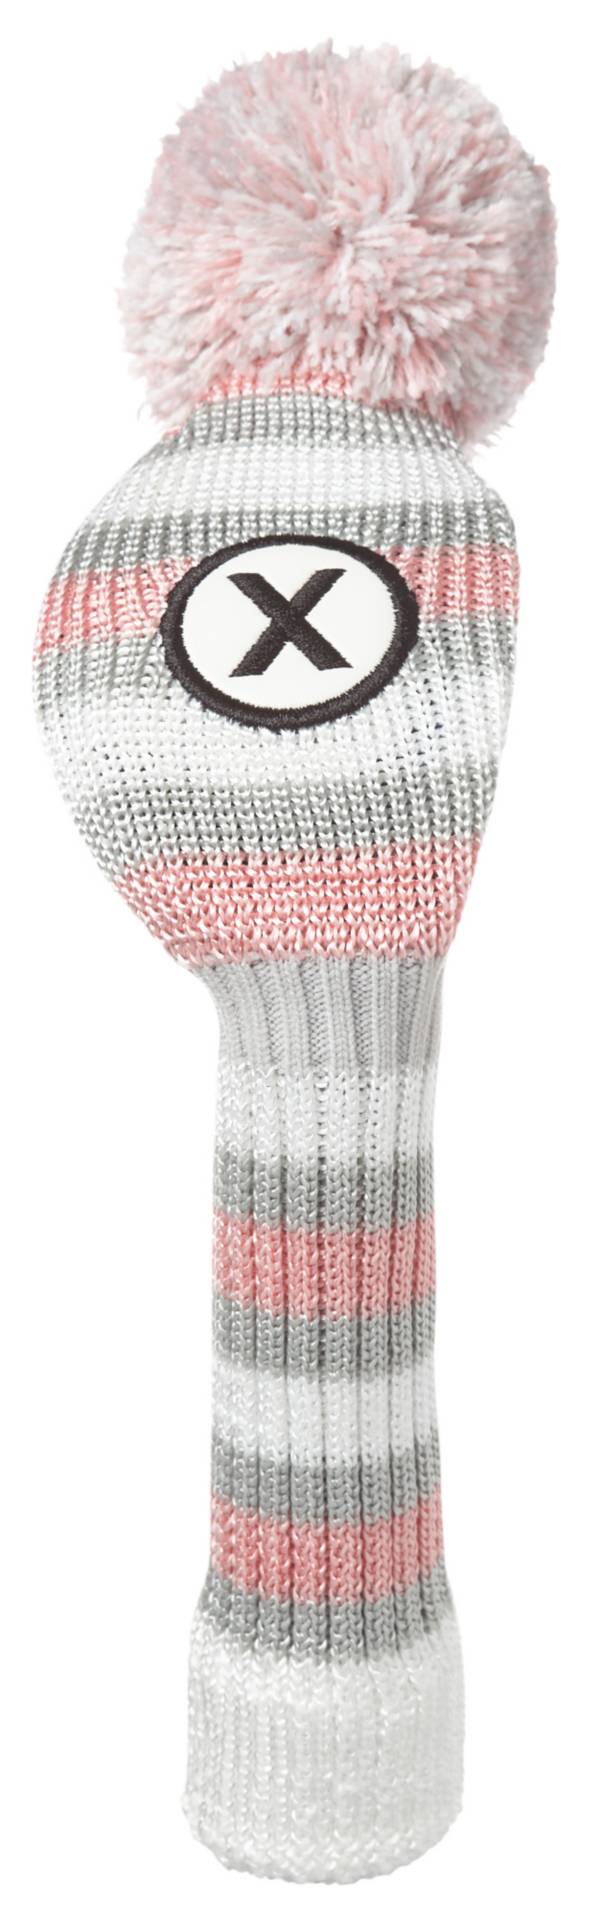 Maxfli Women's Knit Hybrid Headcover product image